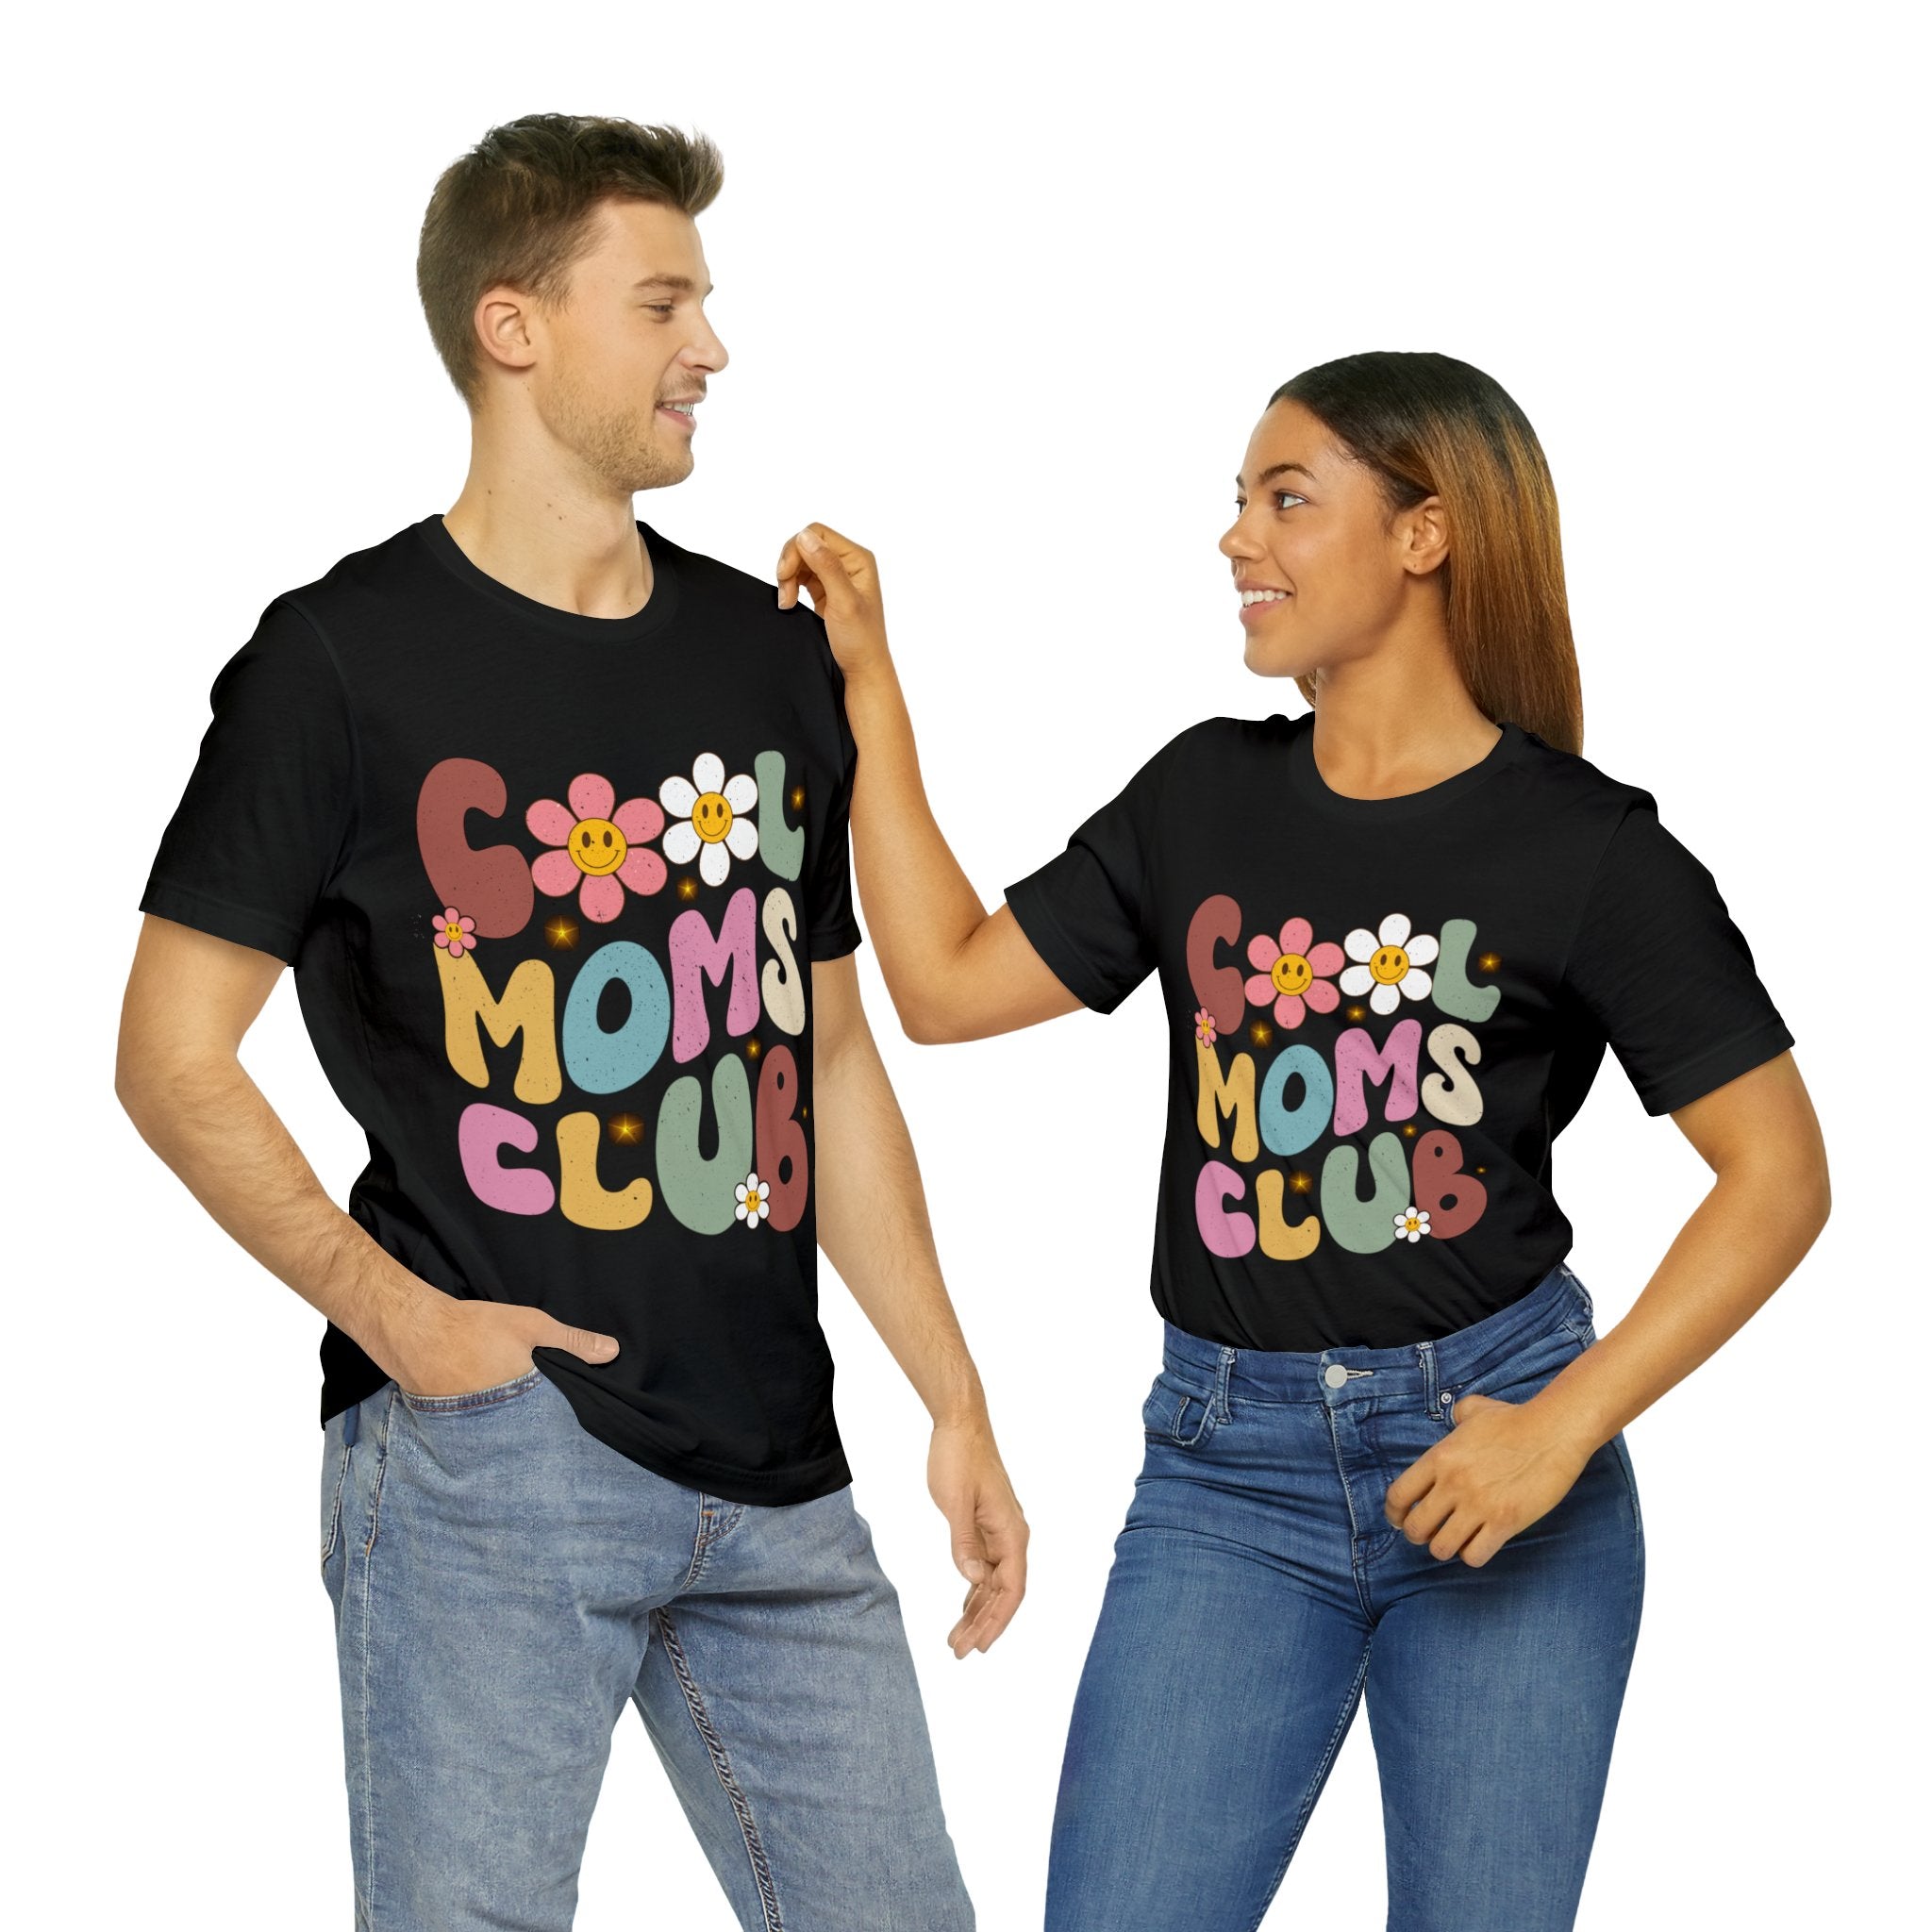 Cool Moms Club